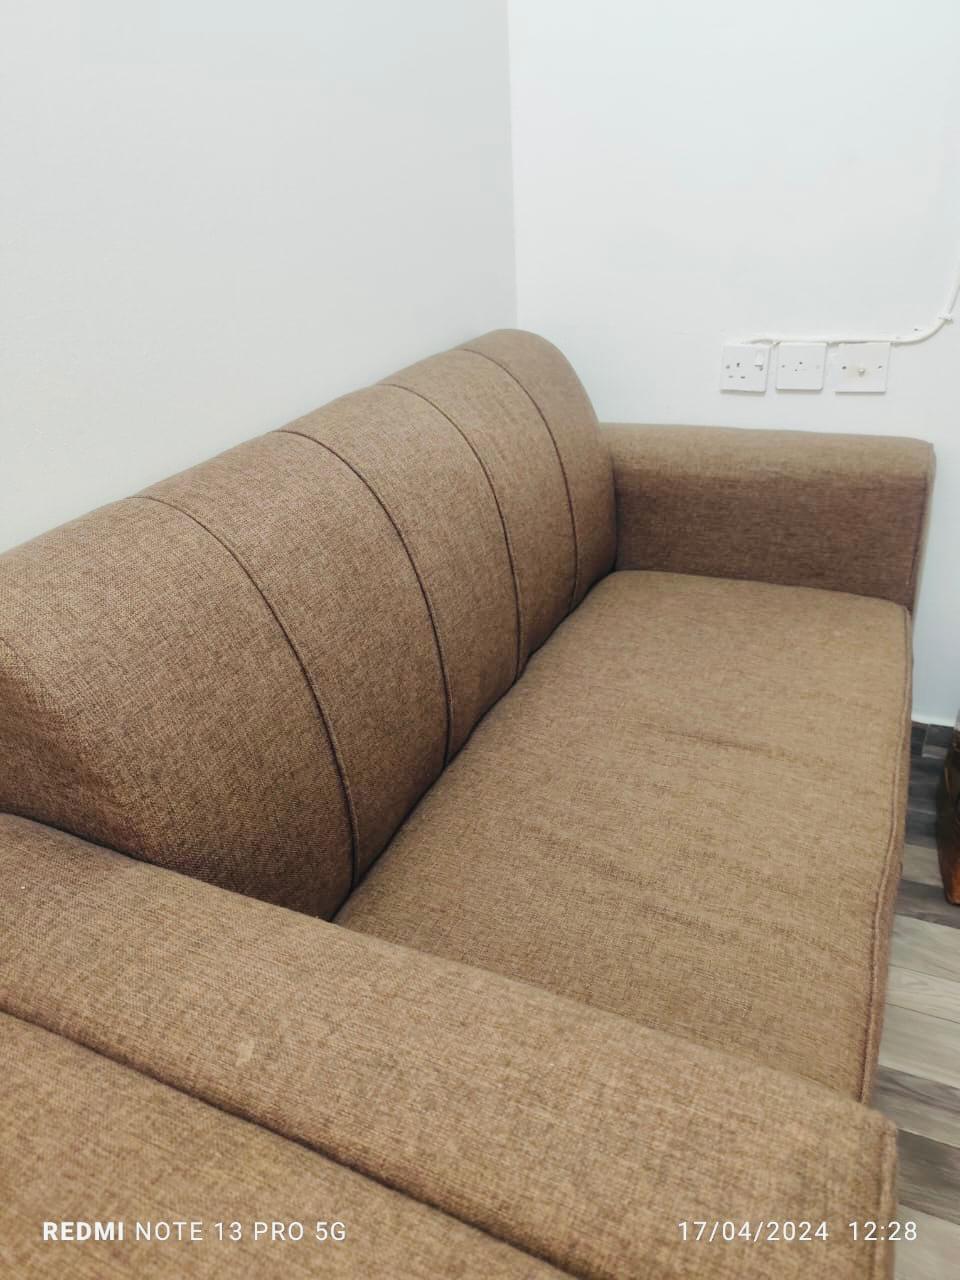 Folding coat & sofa set